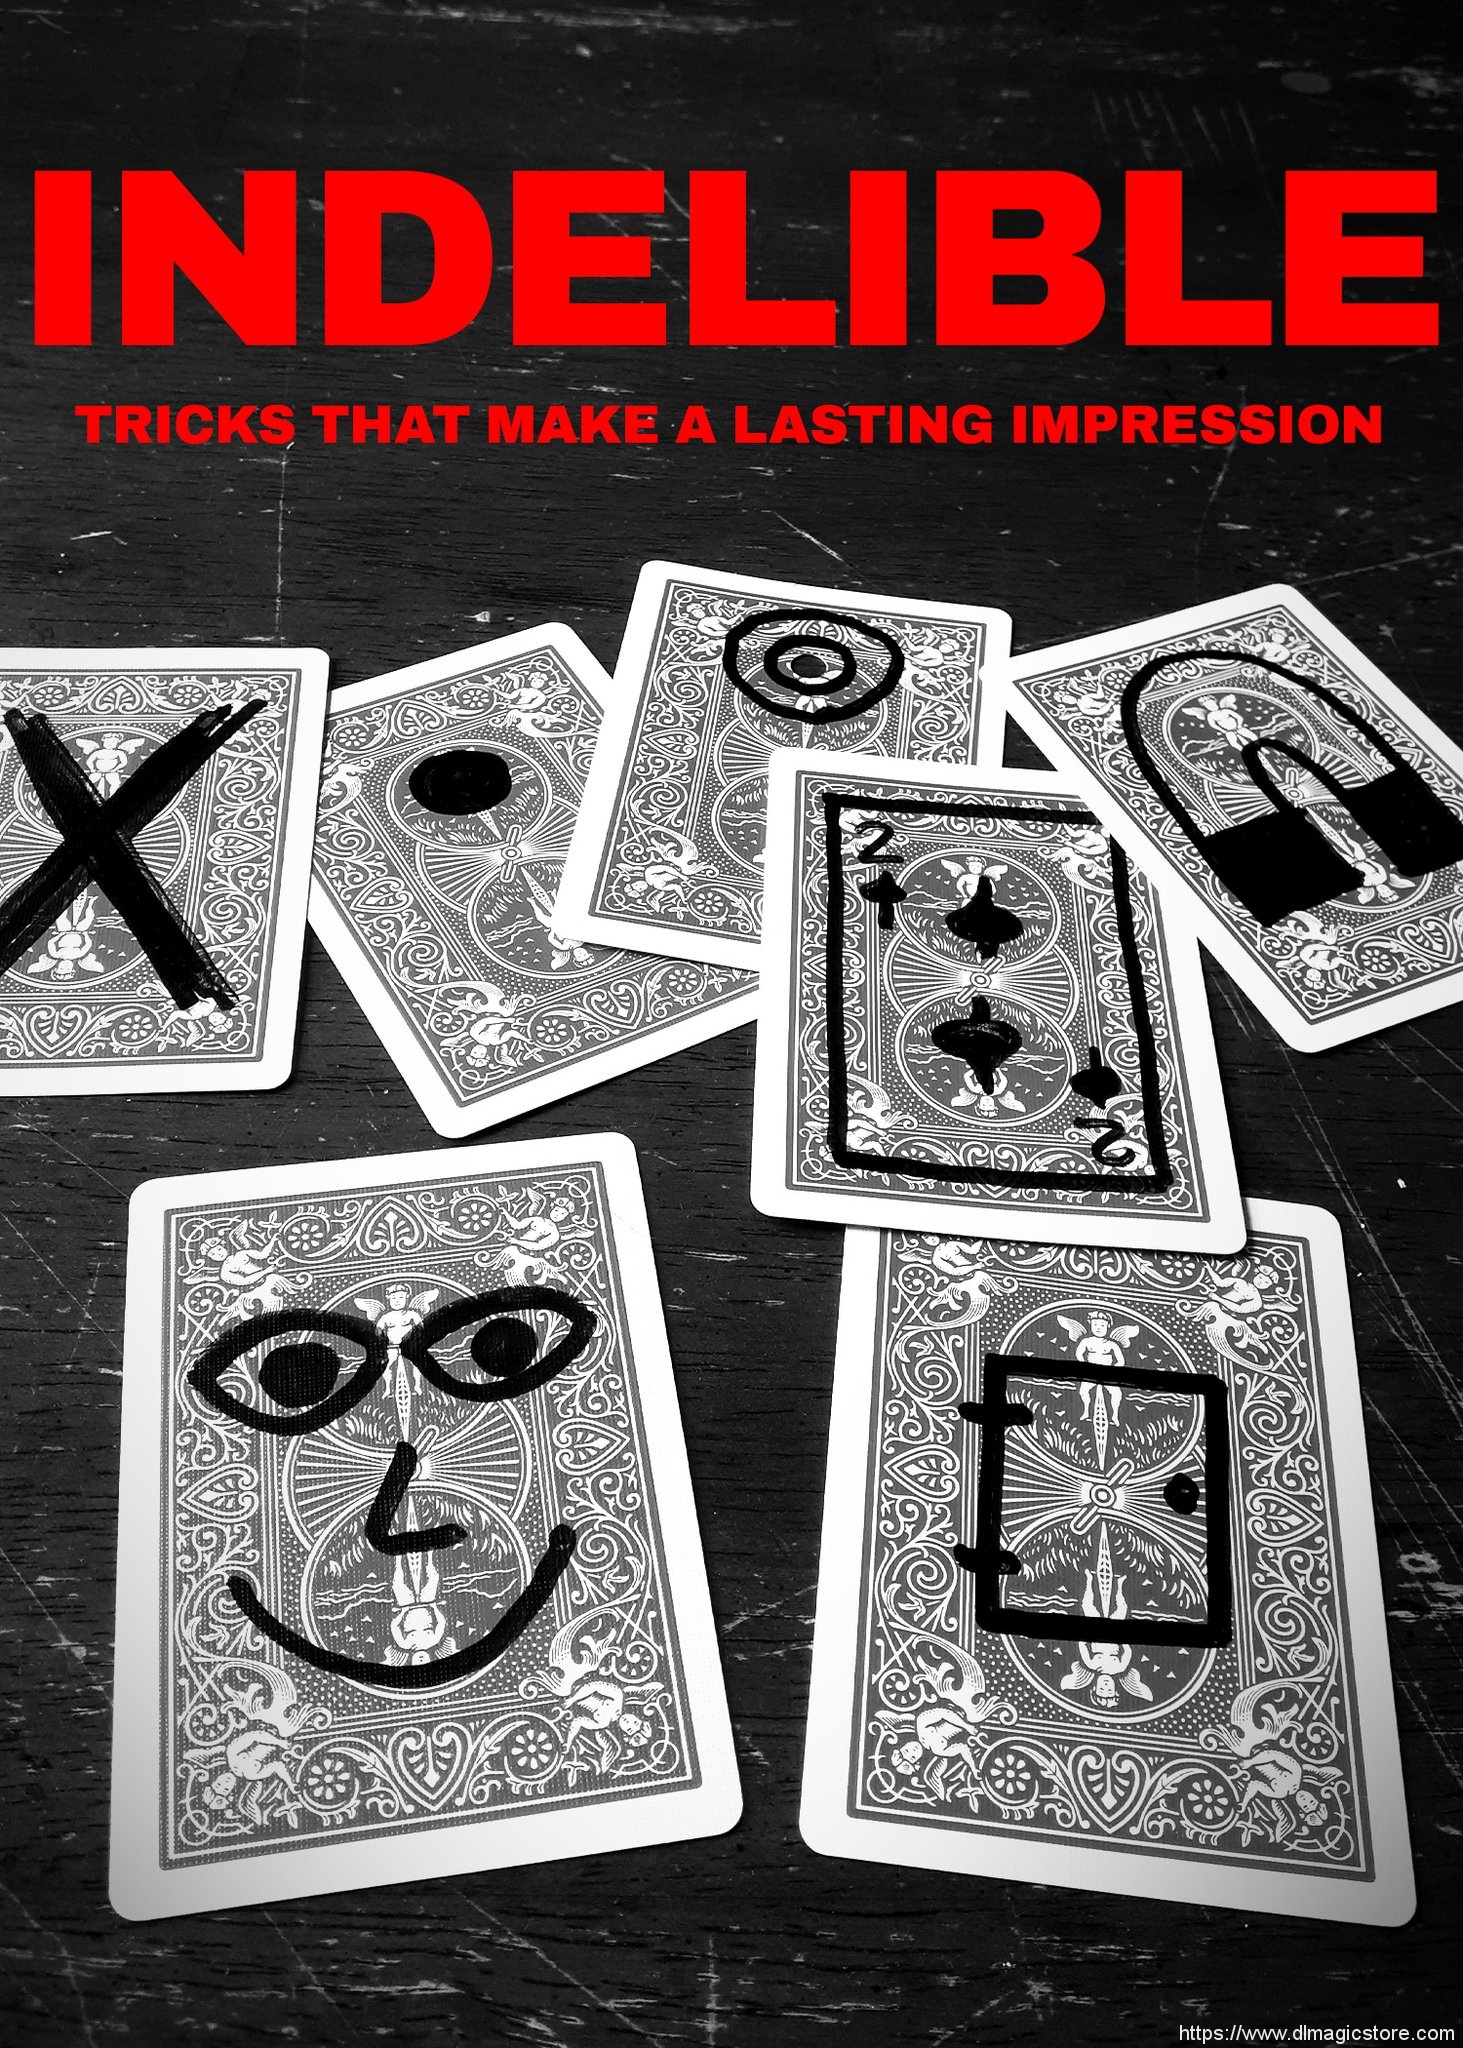 Indelible by Jay Sankey